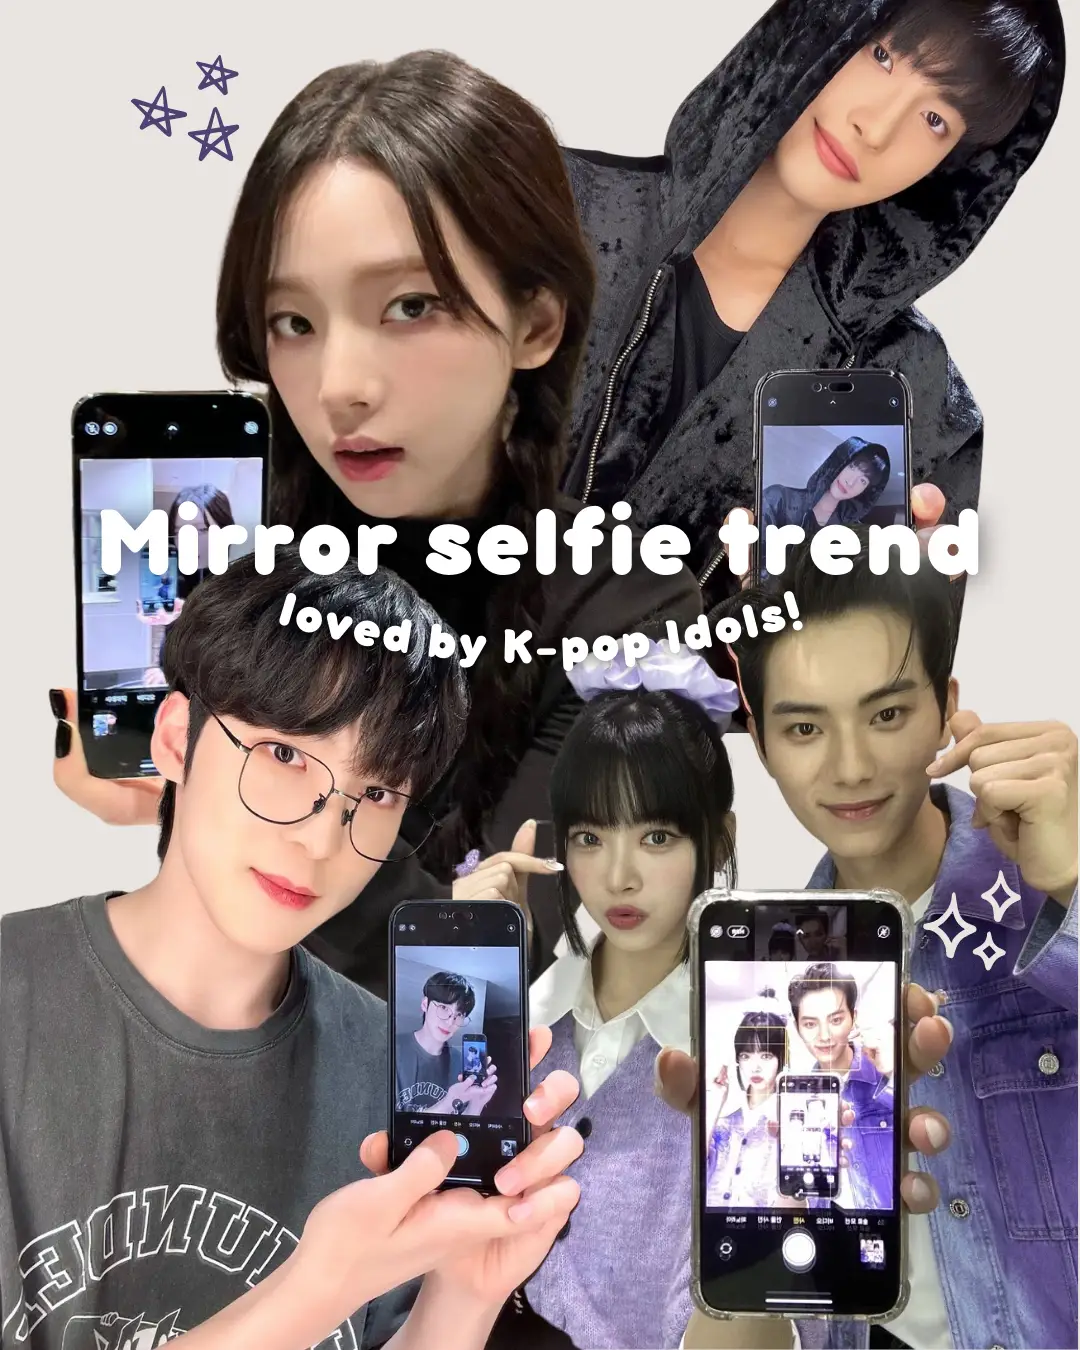 What's your favorite mirror selfie from K-pop idols? - Quora